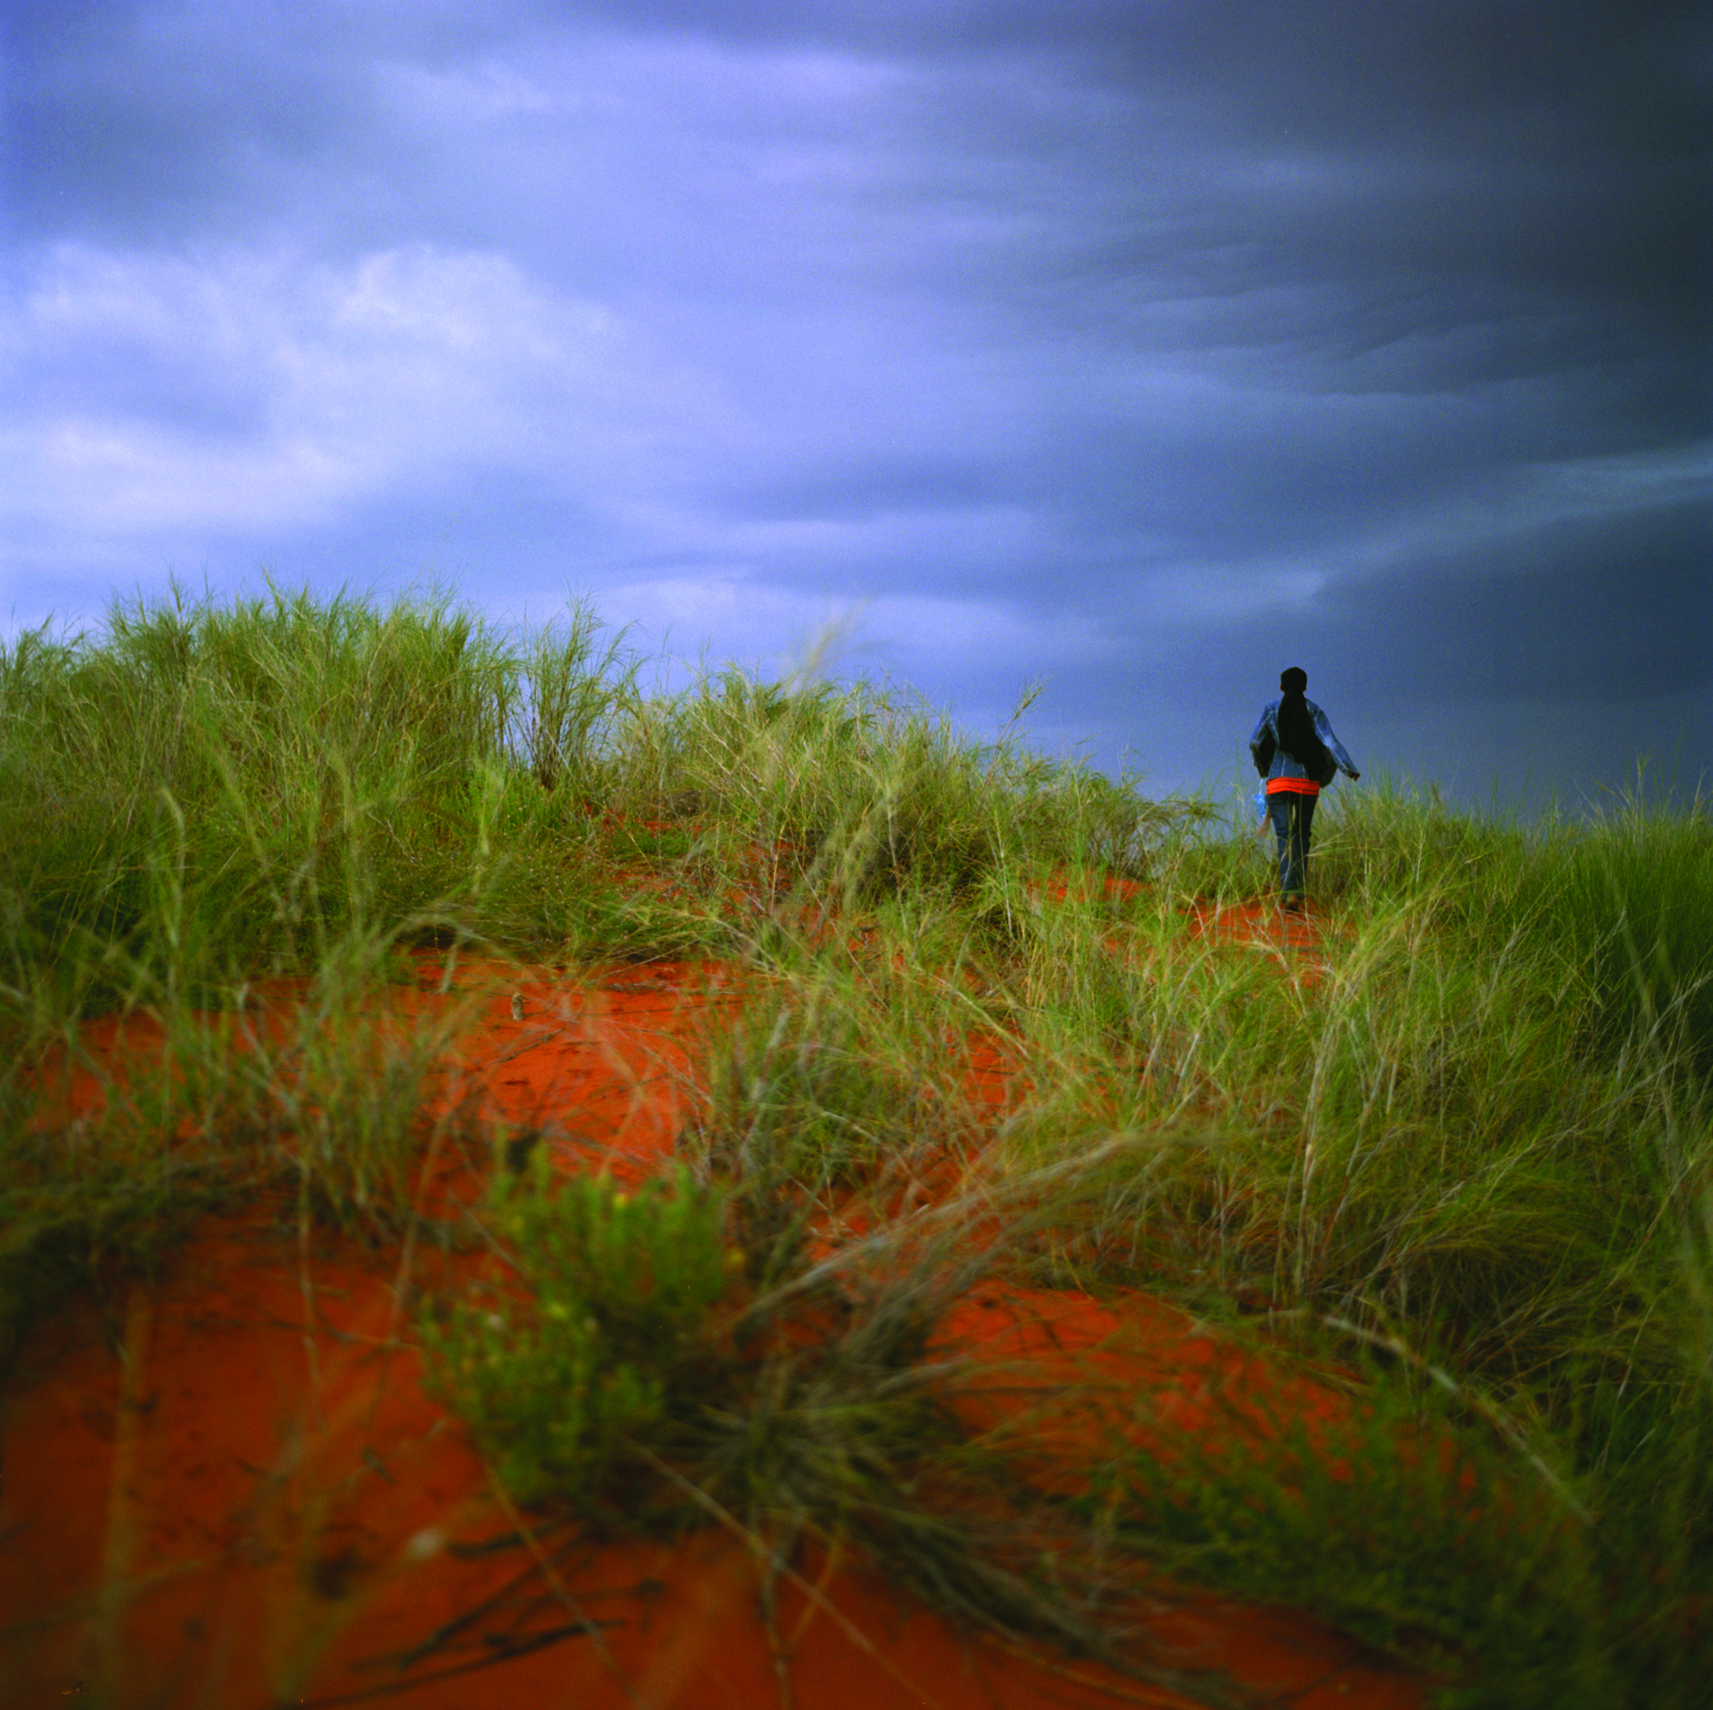 From the series Kalahari 2010